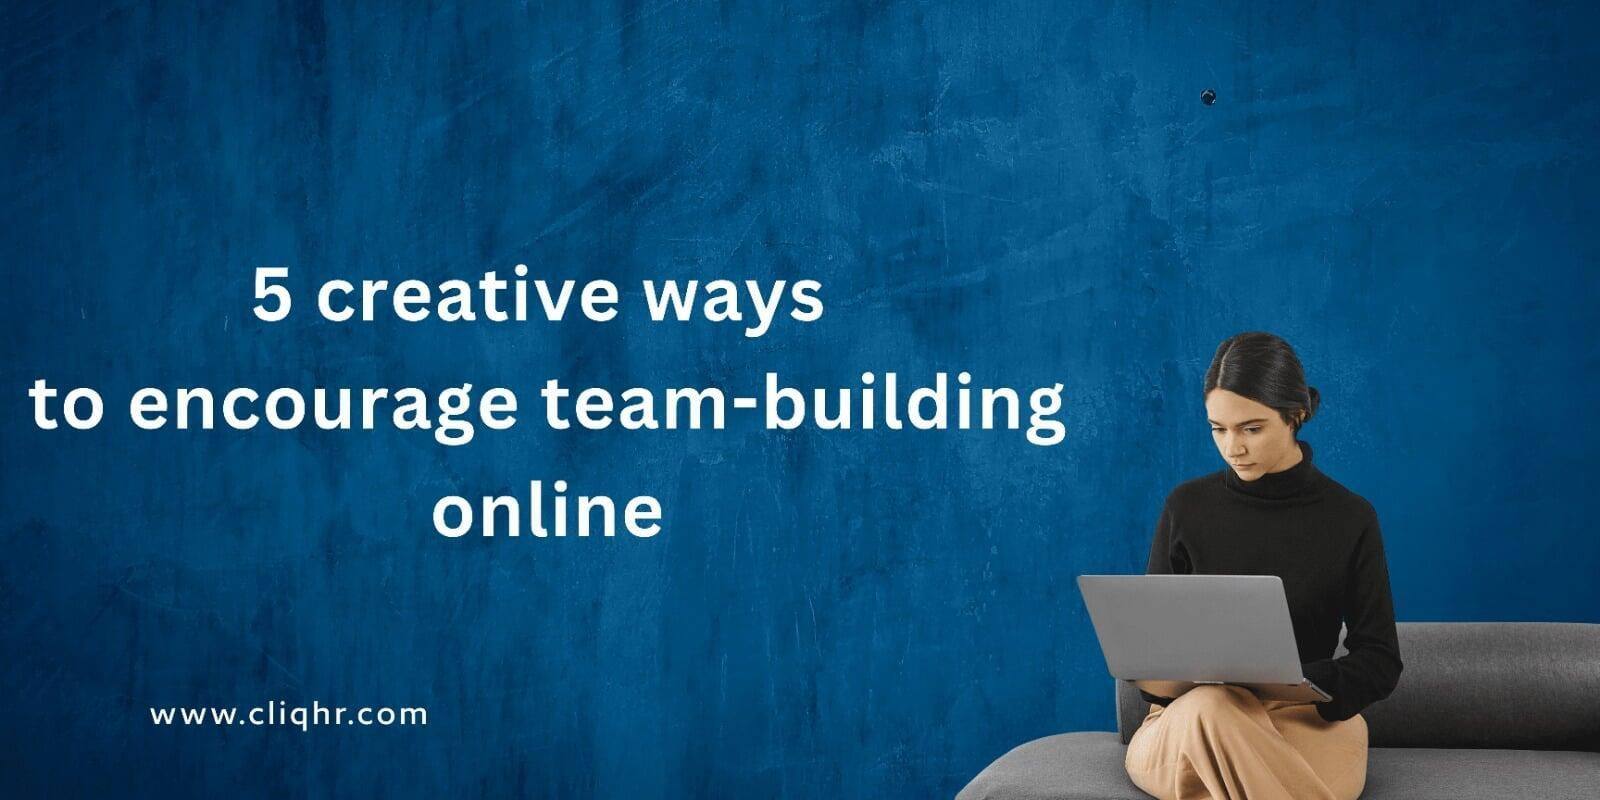 5 creative ways to encourage team-building online